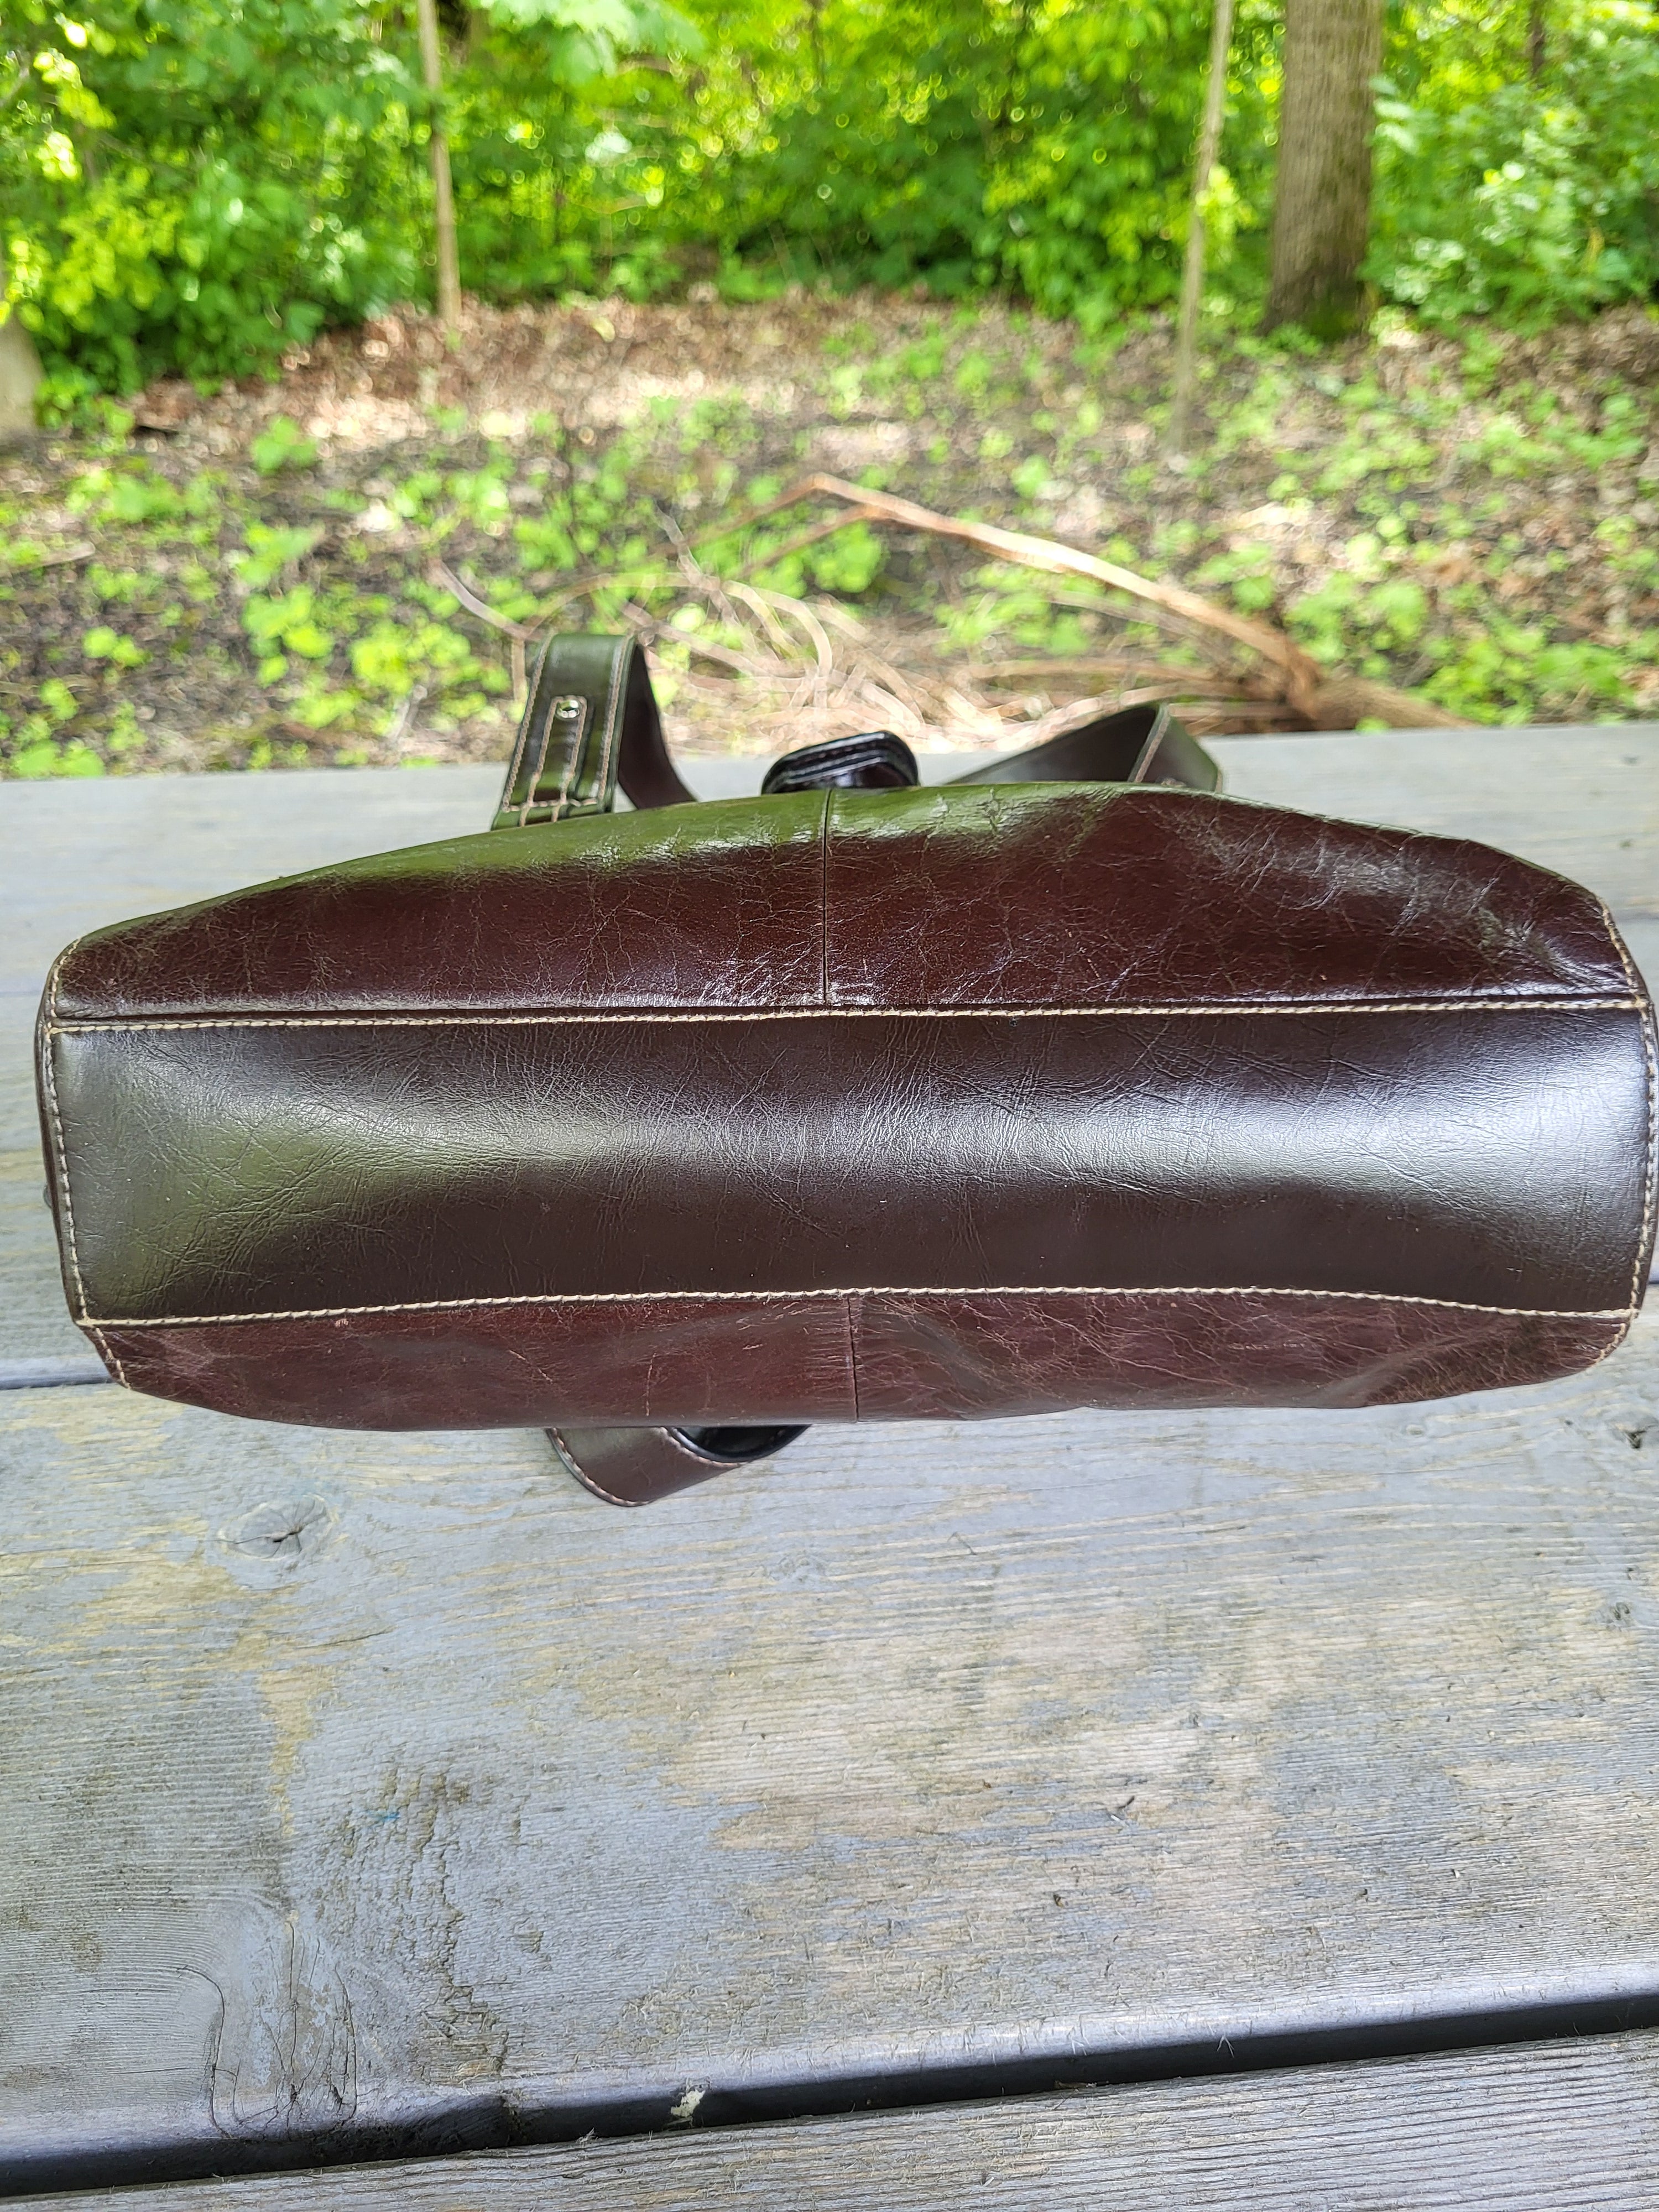 Distressed Brown Leather and Vinyl Shoulder Bag